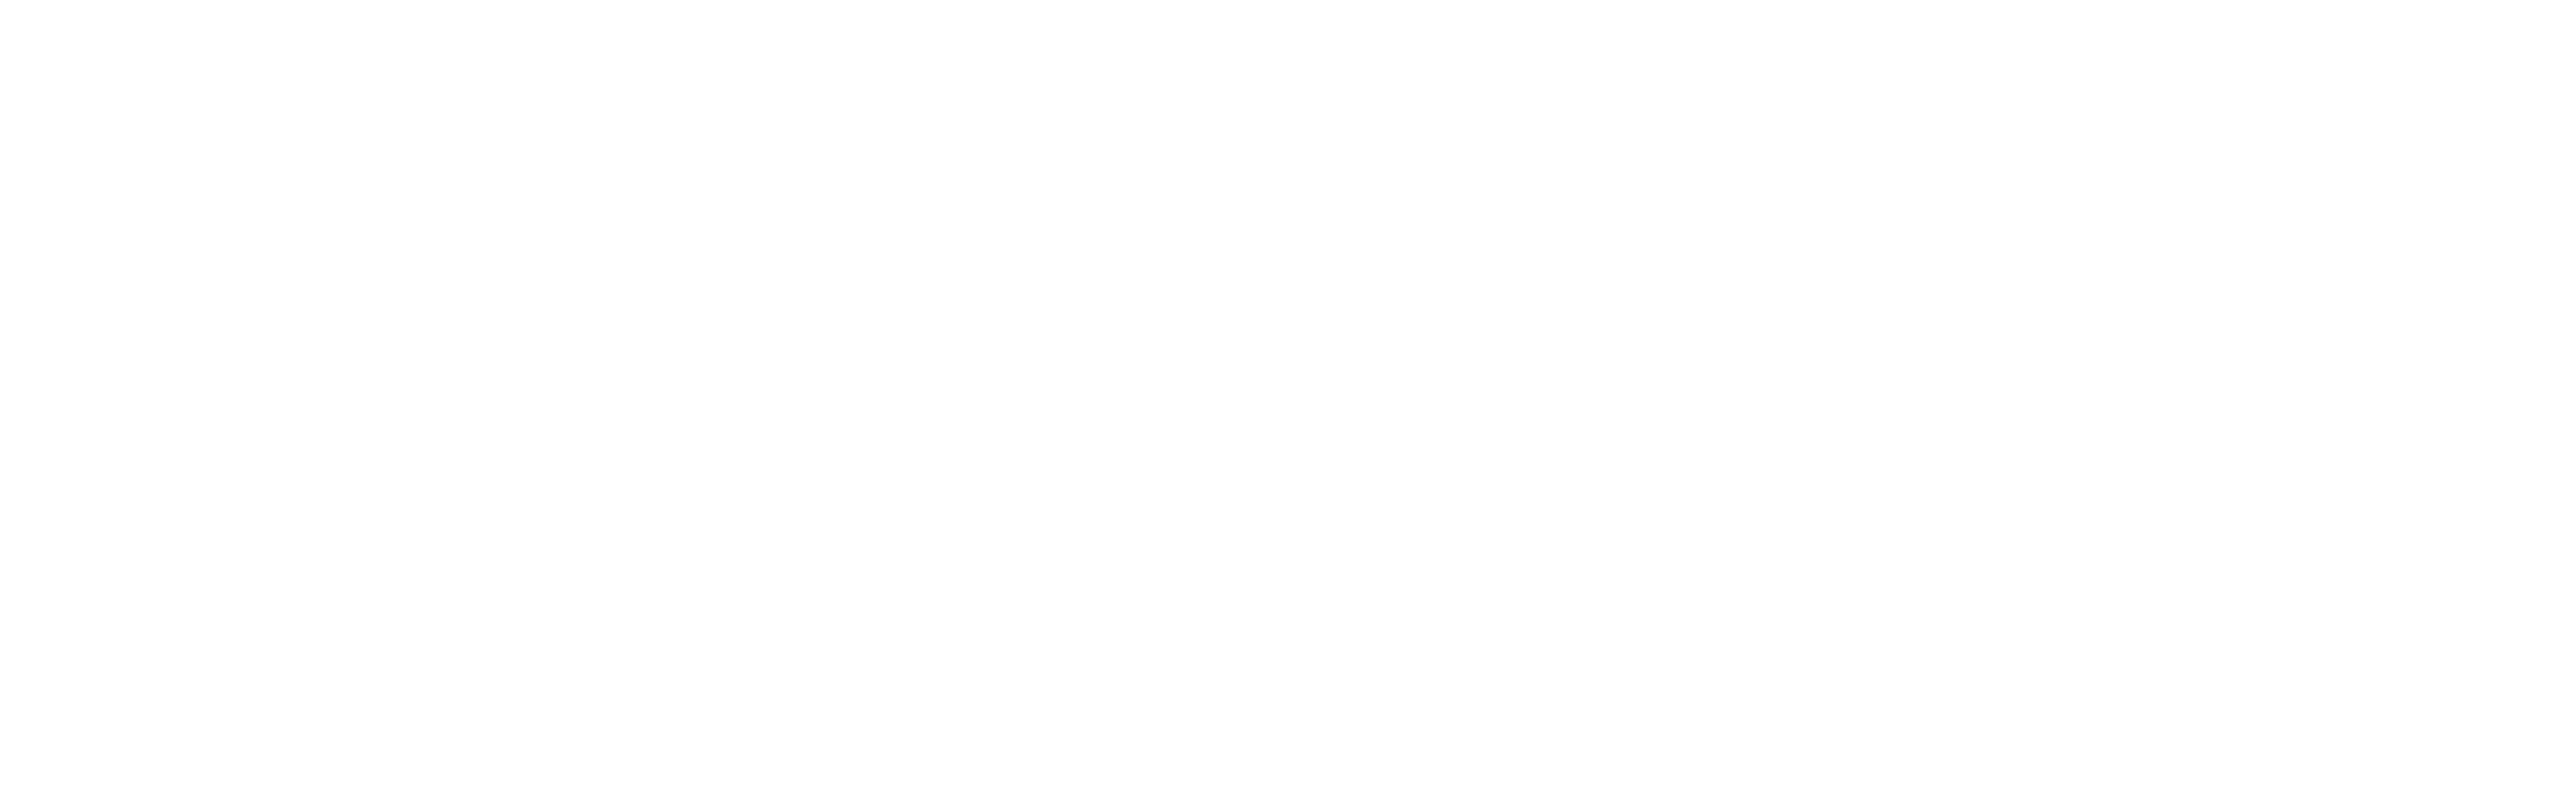 Pershing Square Foundation logo